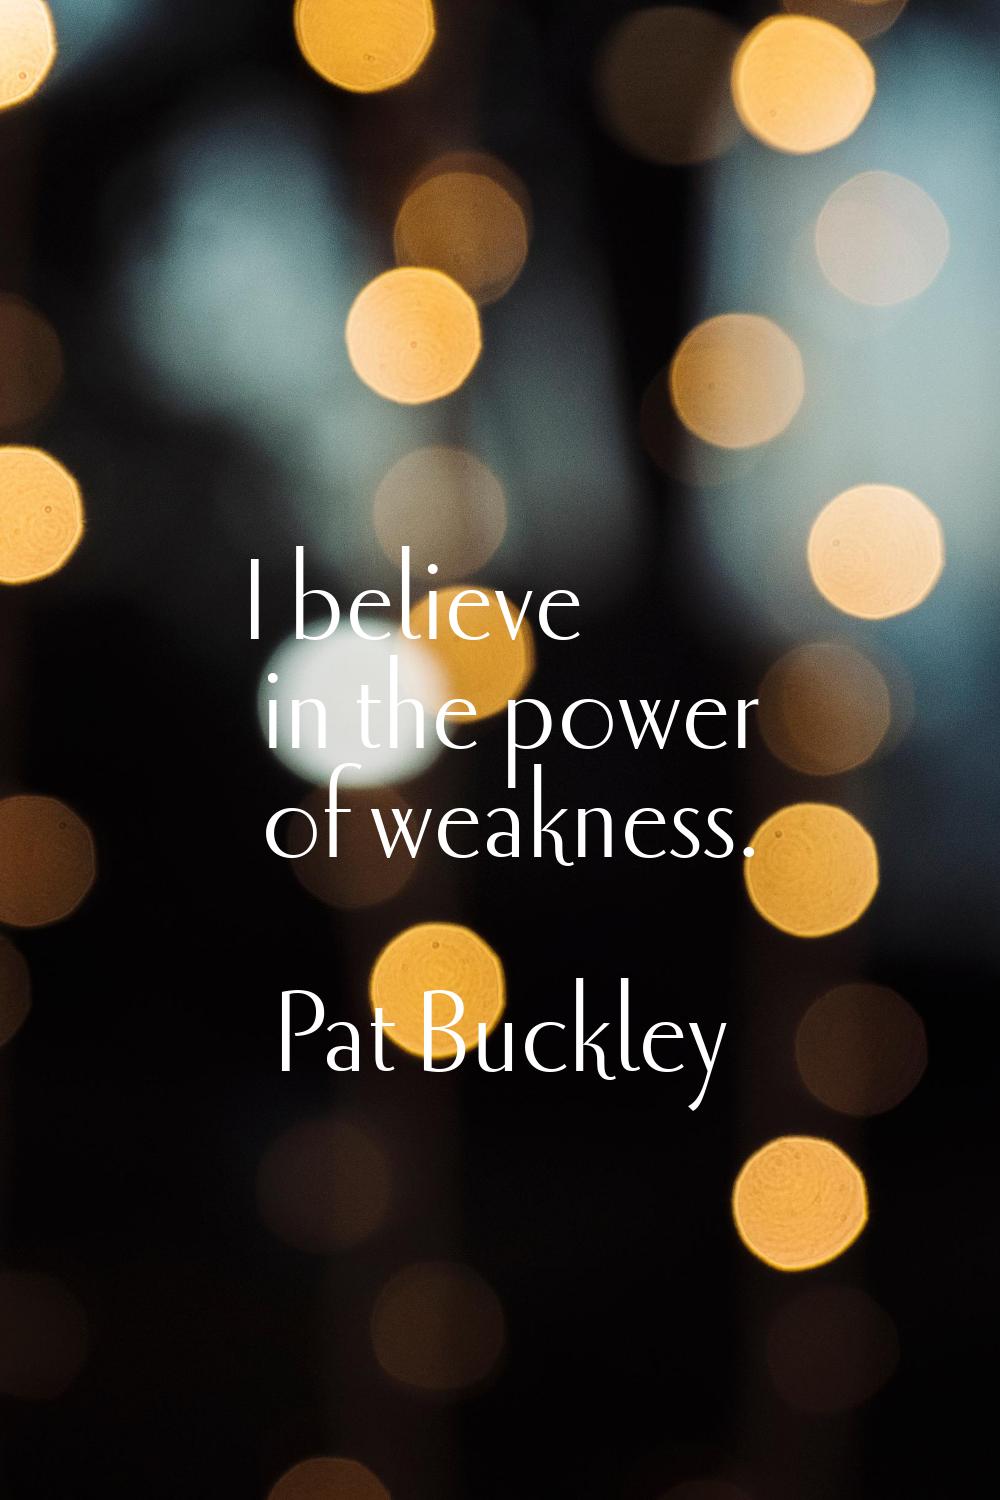 I believe in the power of weakness.